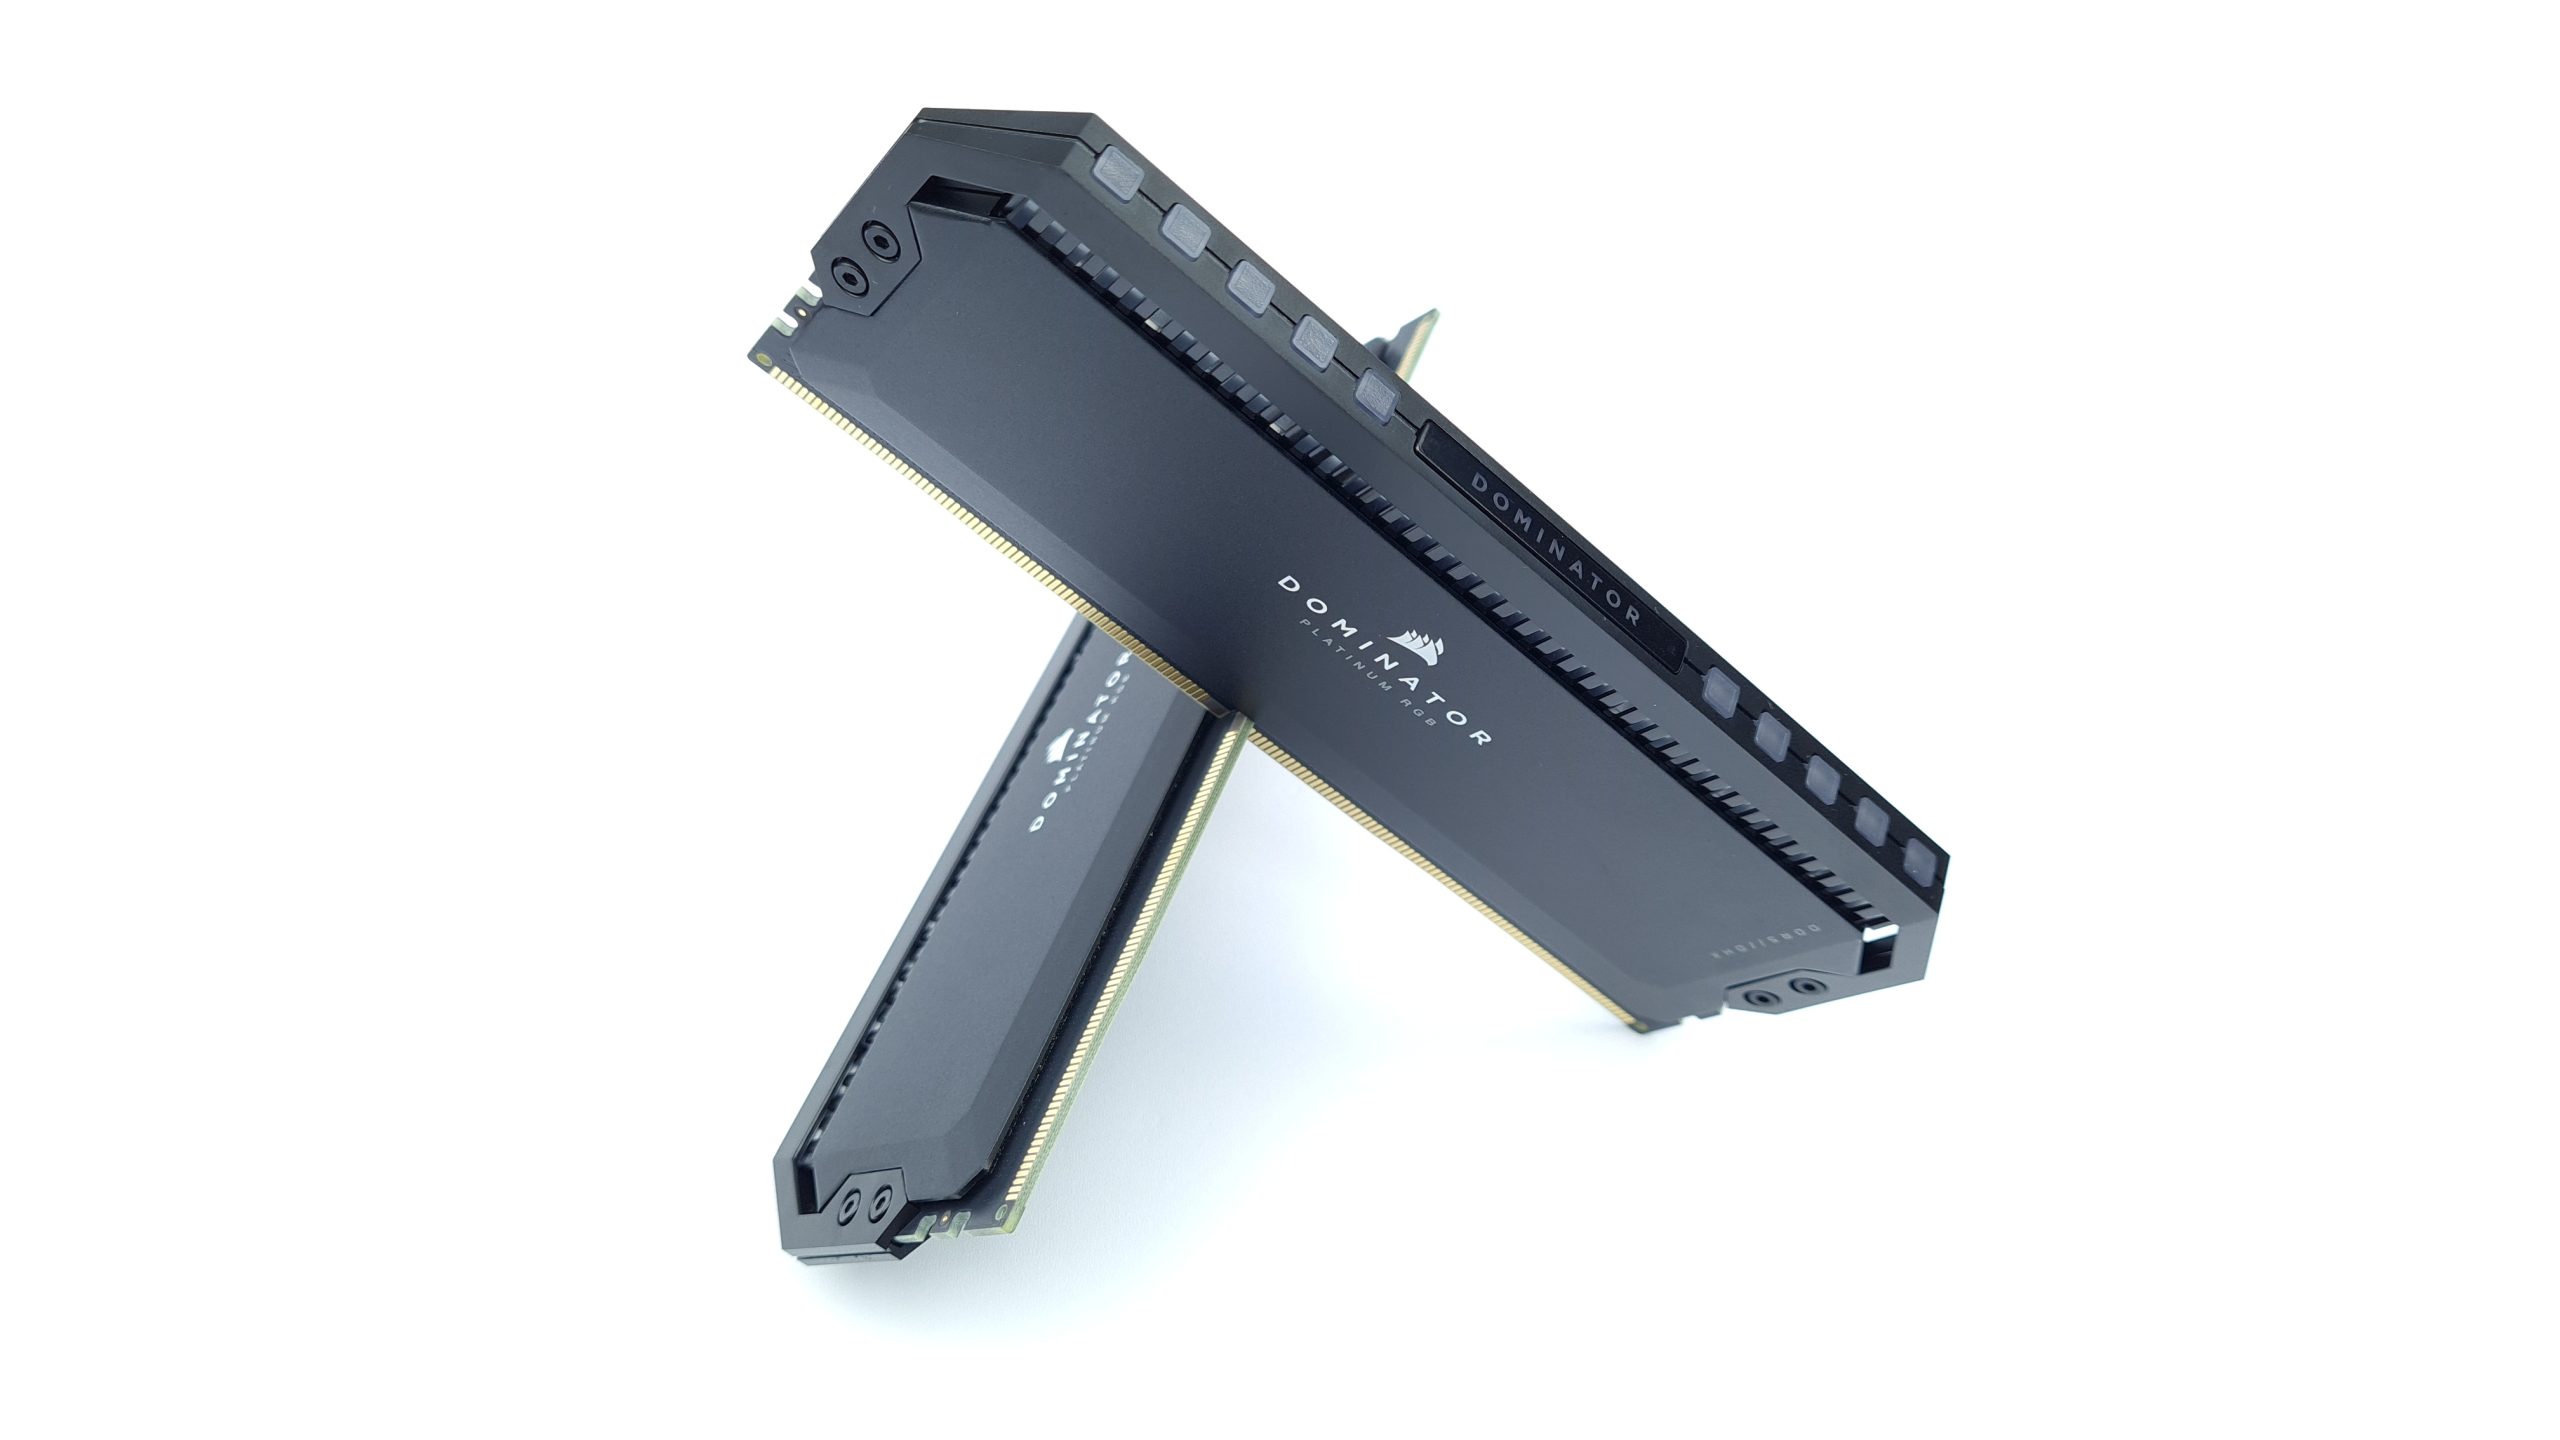 CORSAIR DOMINATOR PLATINUM RGB DDR5-6400MHz Kit Launched